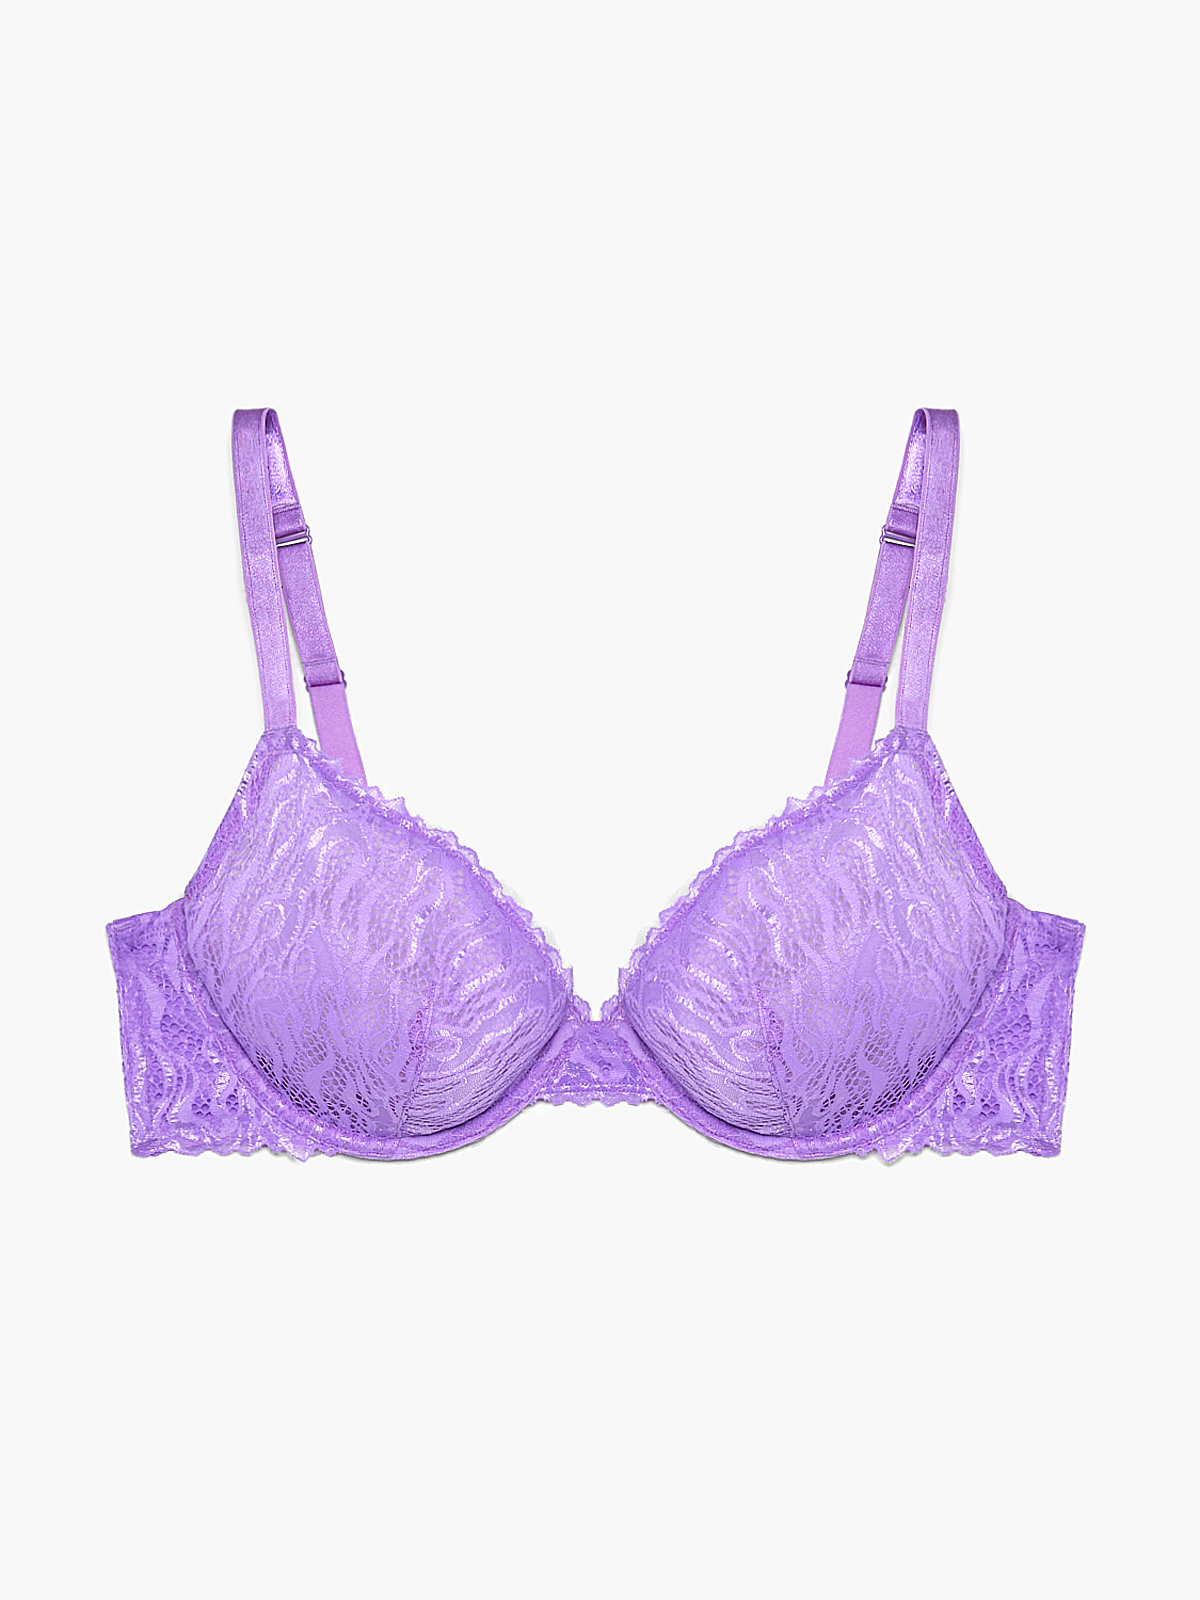 Buy Bralux Women's Lazari Purple Color Cup B Bra (Purple_32B) at